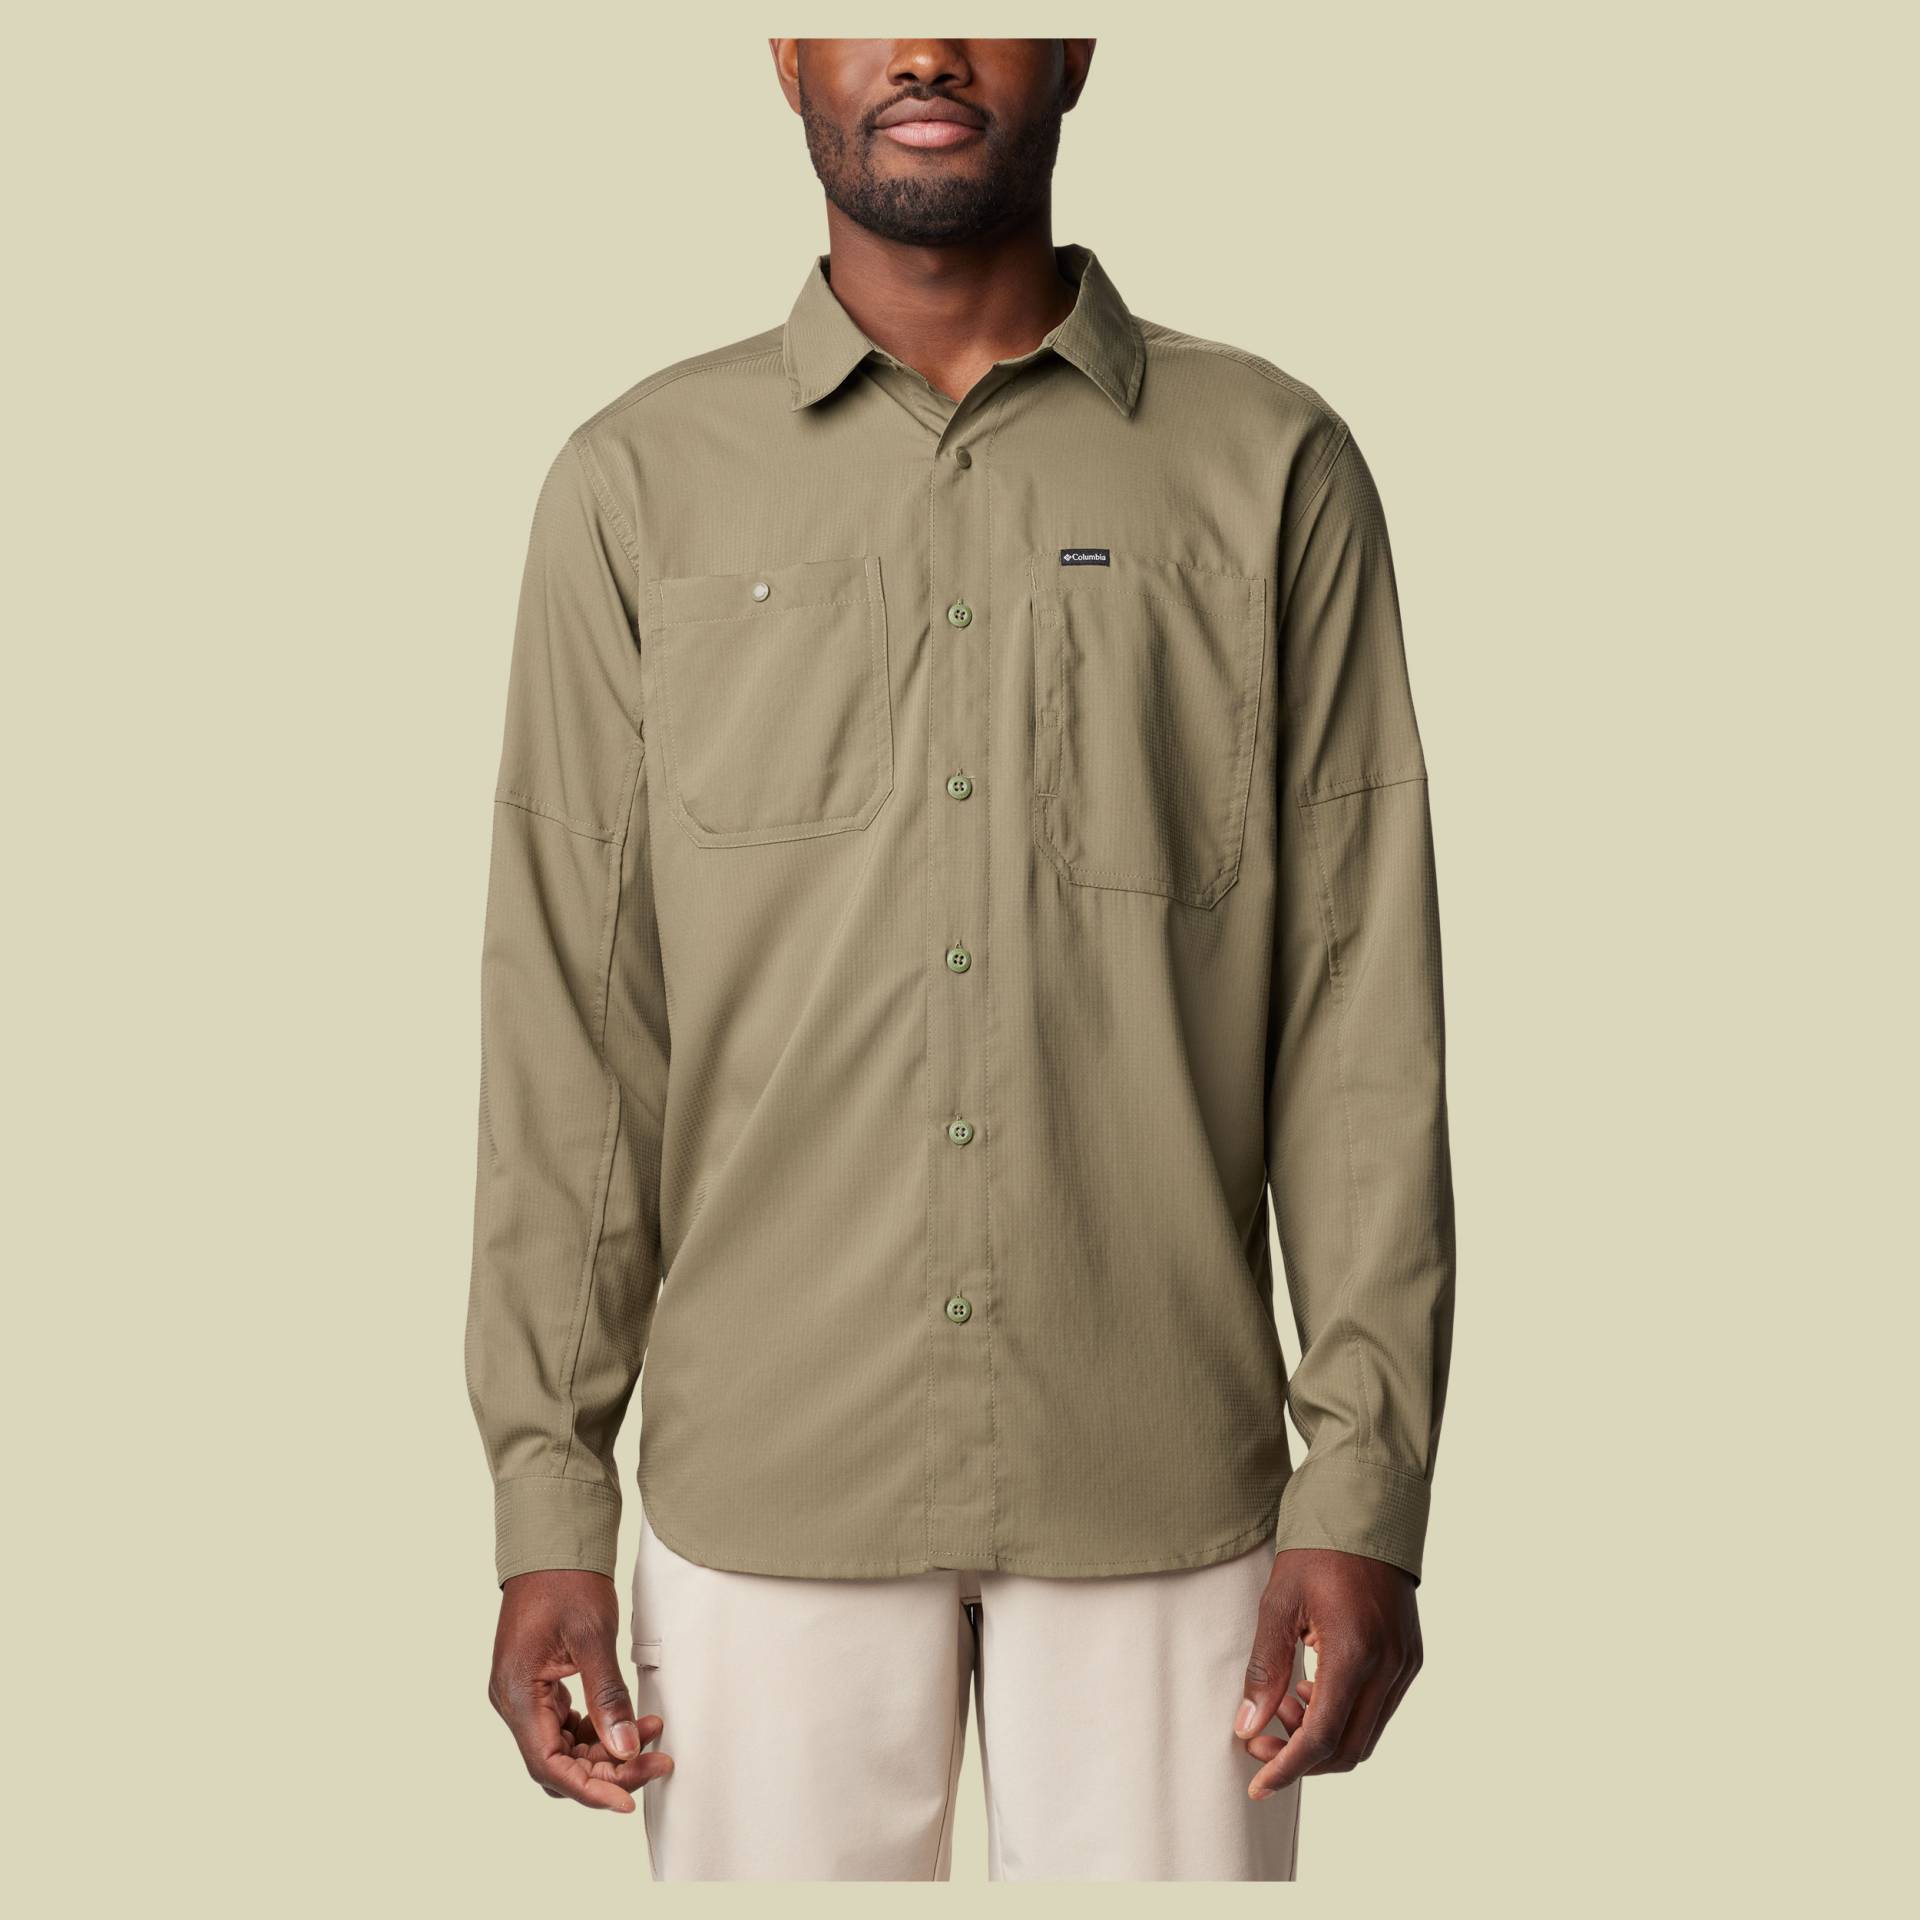 Silver Ridge Utility Lite Long Sleeve Shirt Men Größe S Farbe stone green von Columbia